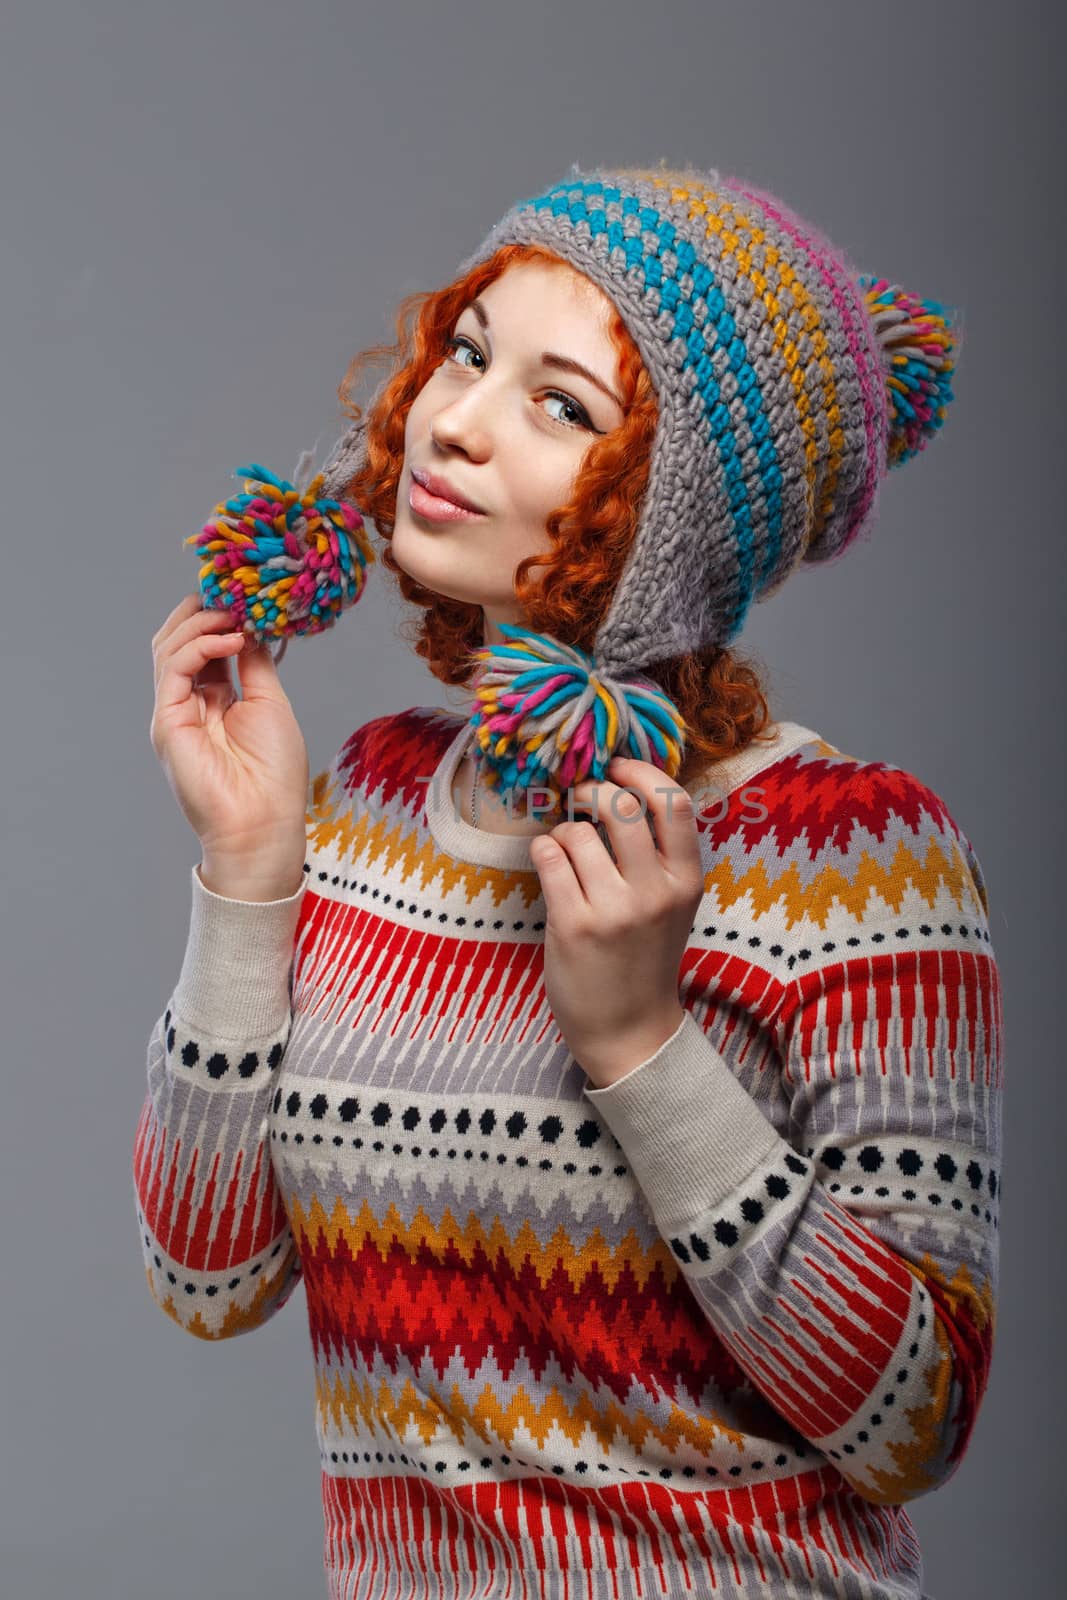 Girl in knitted cap by Vagengeym